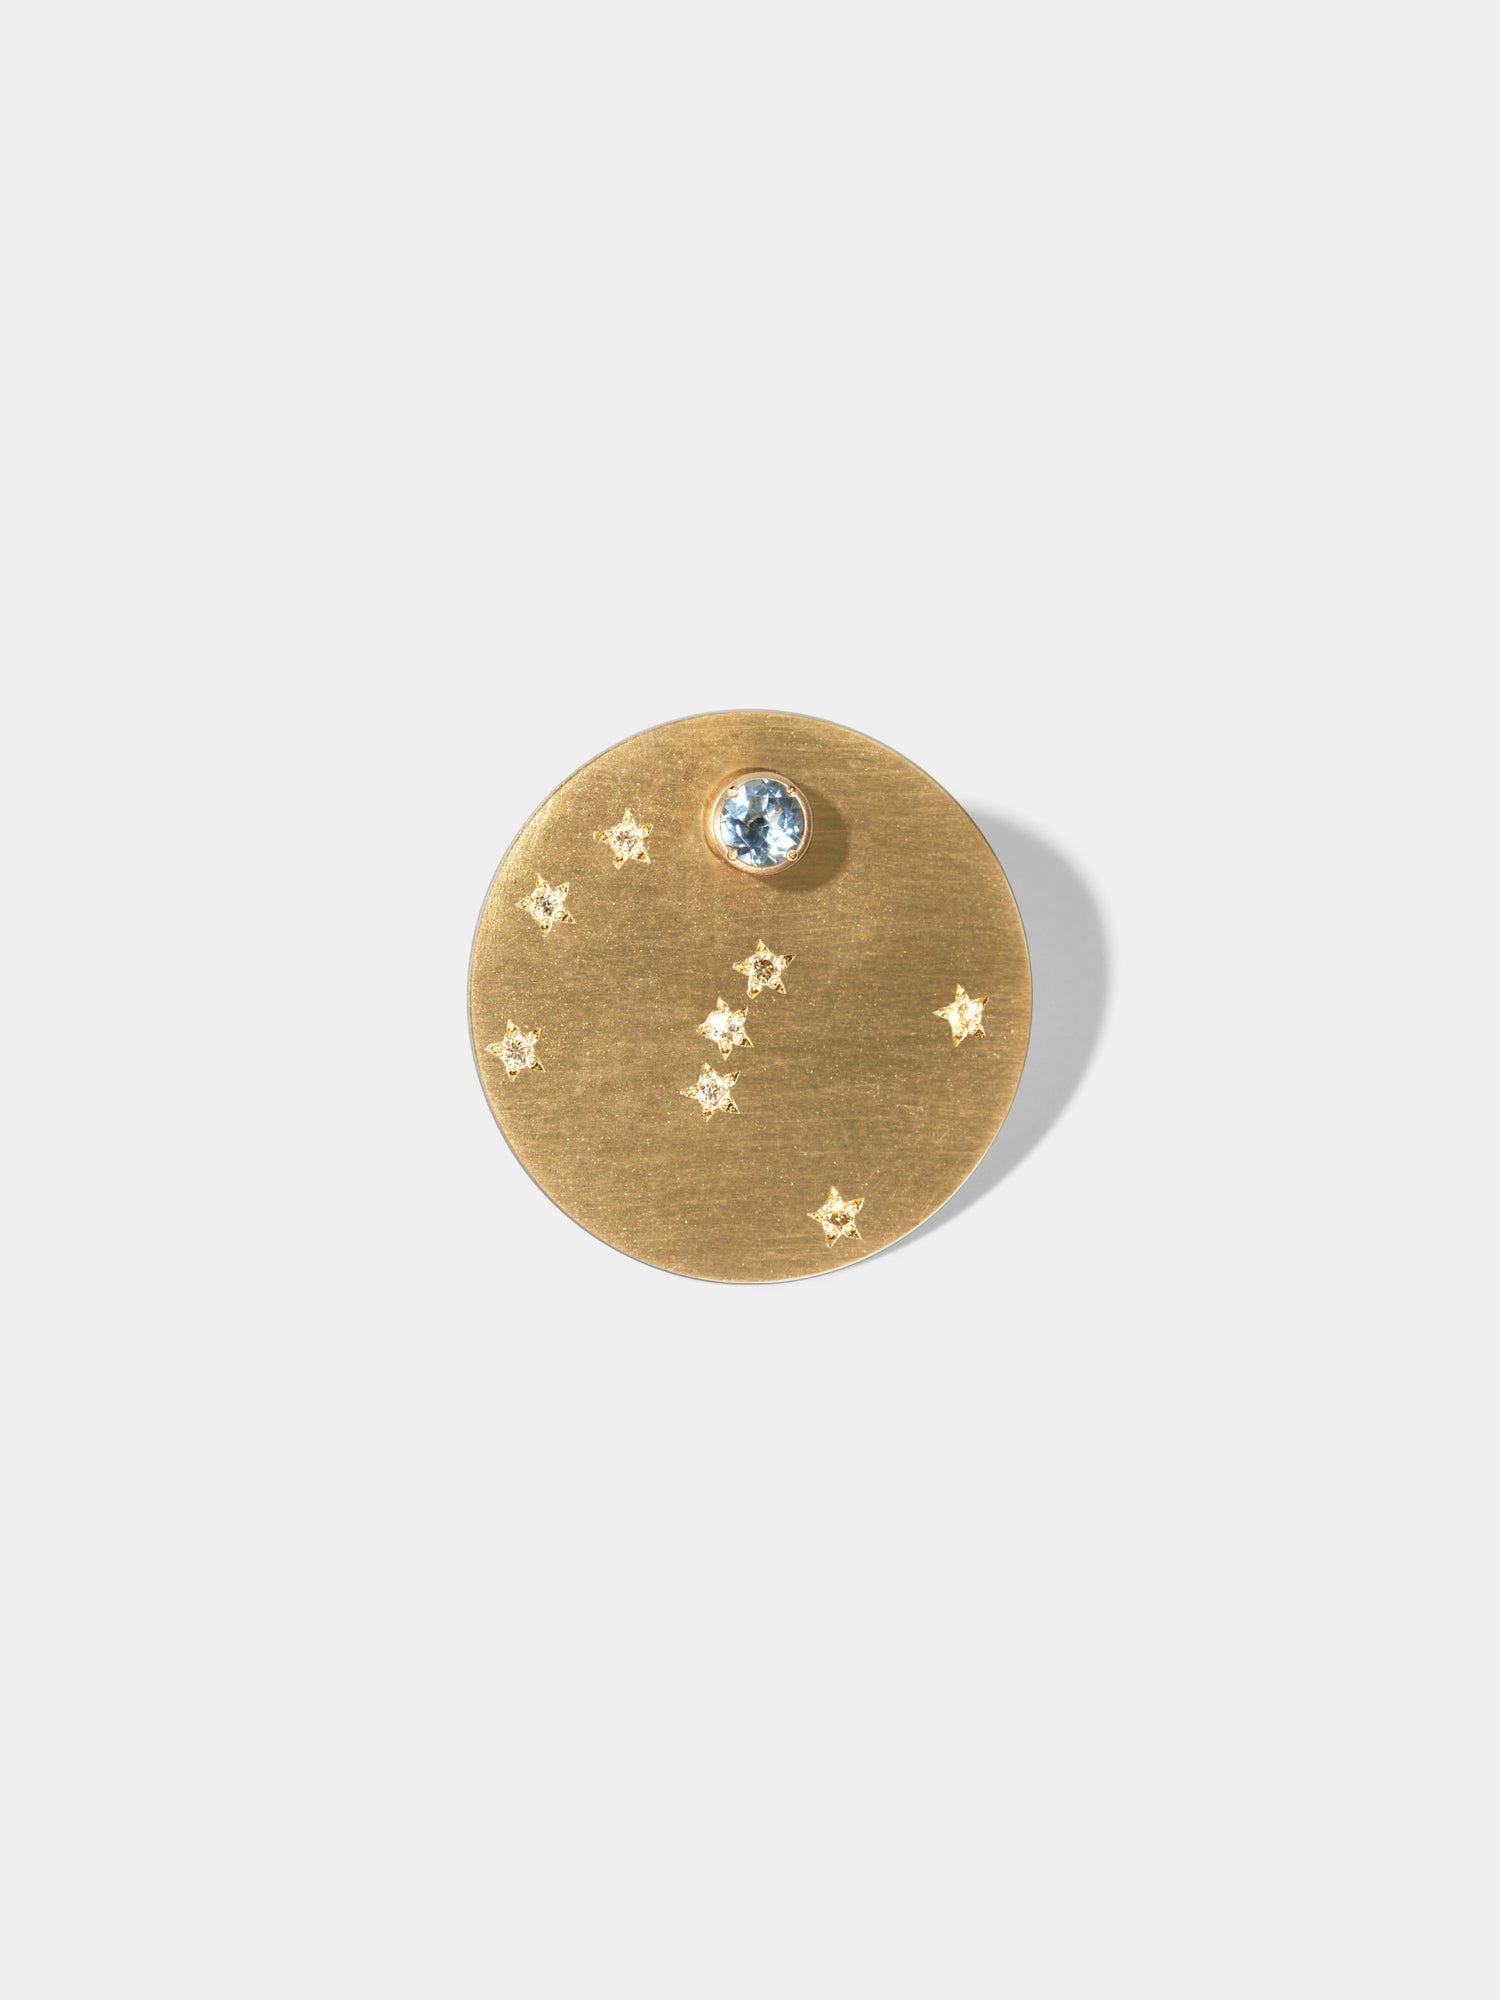 ASTERISM_Pierced Earring_Orion(オリオン座) / Aquamarine